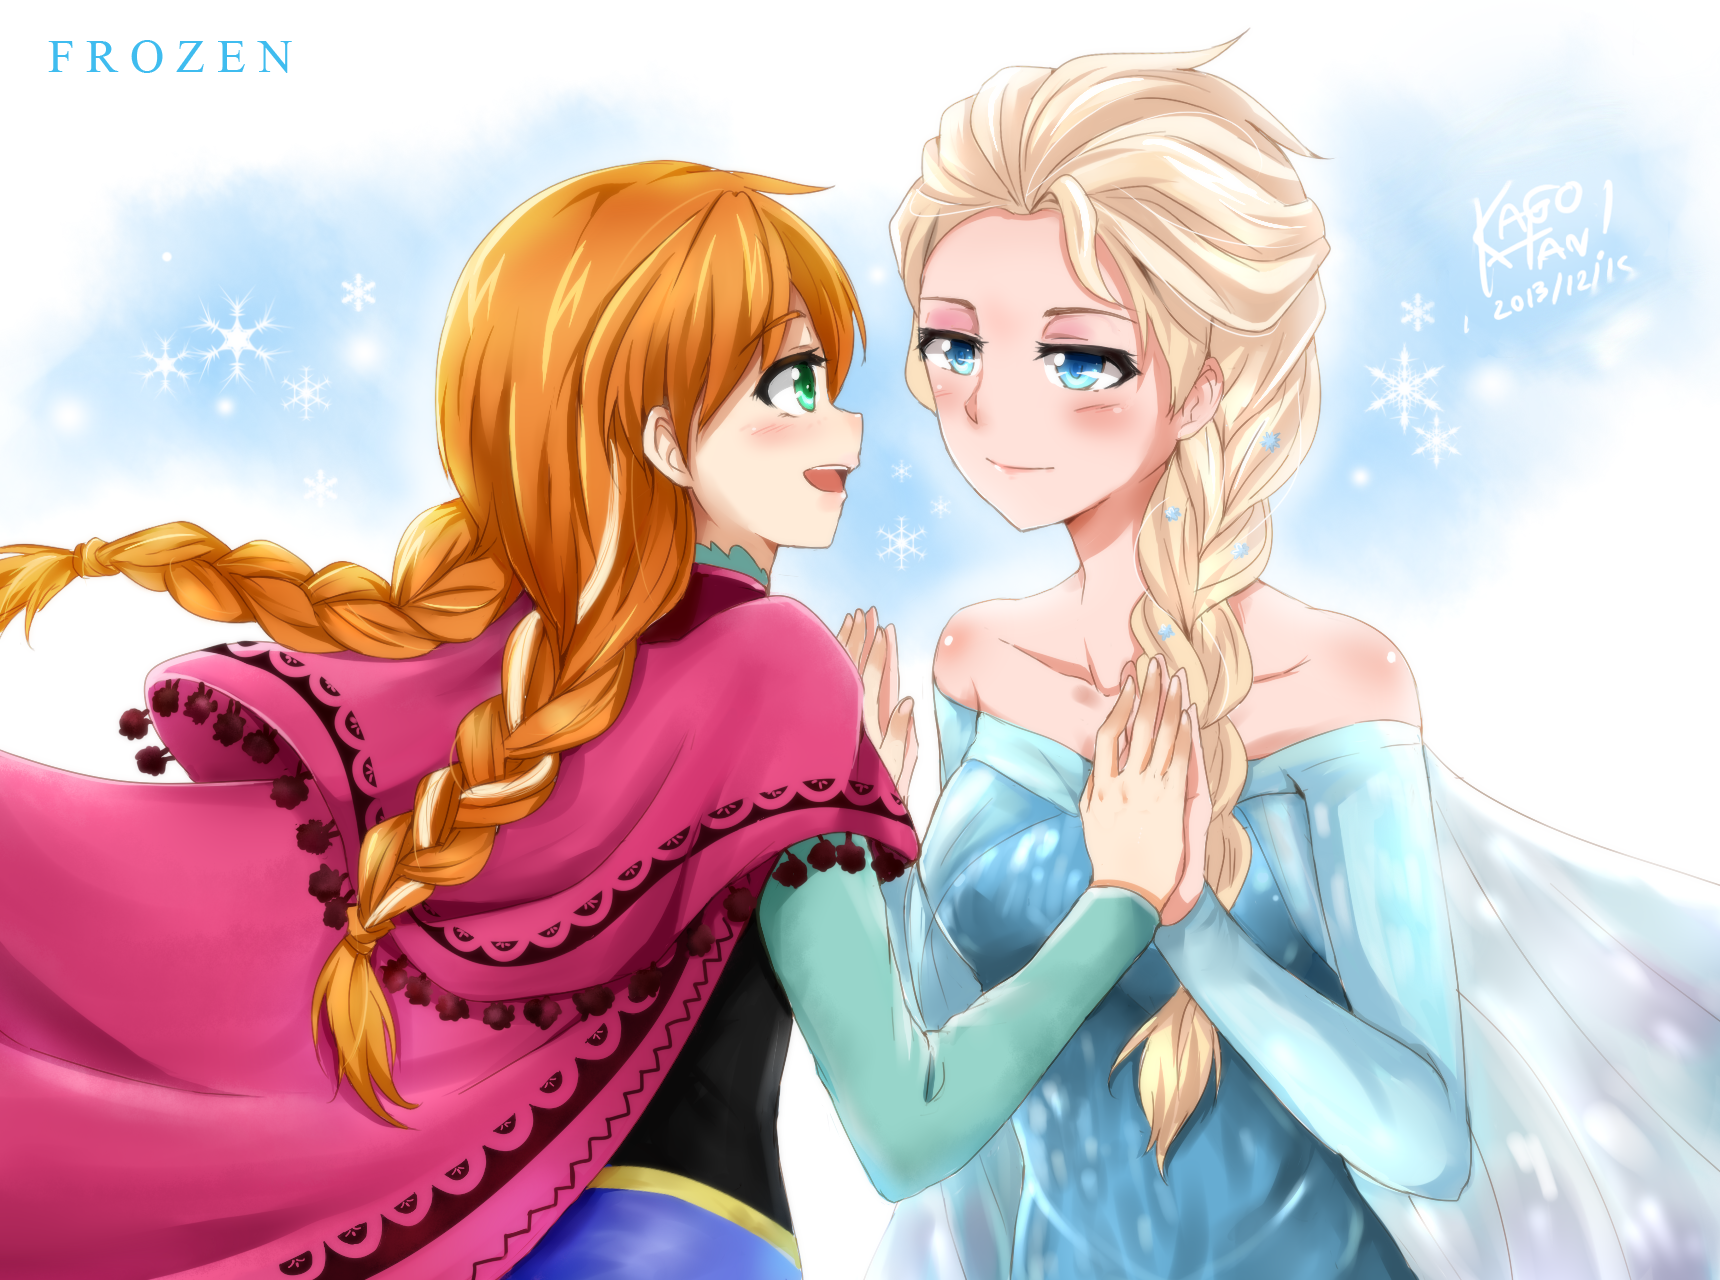 General 1720x1280 Disney animated movies Frozen (movie) Princess Anna Elsa fantasy art two women fantasy girl